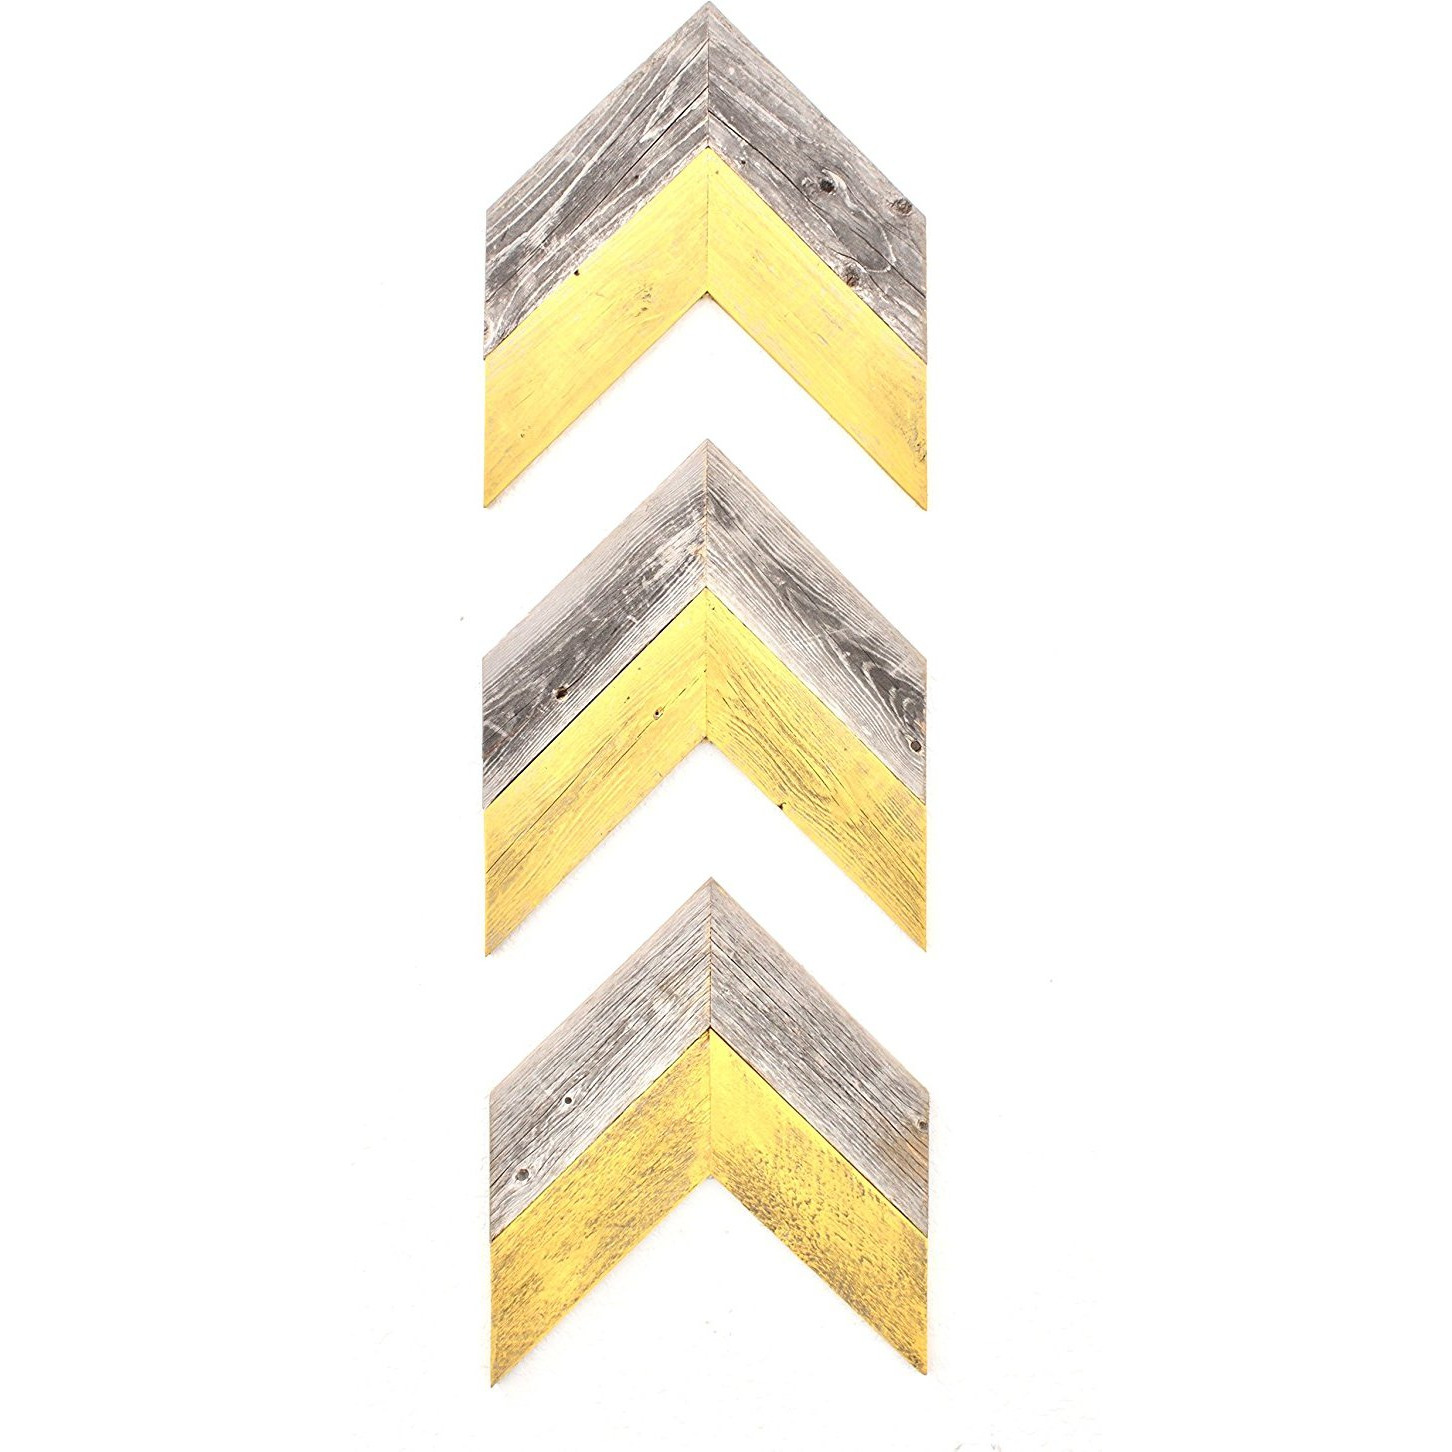 Winmaarc Decorative Chevron Arrows - Set of 3 Decorative Wall Hanging